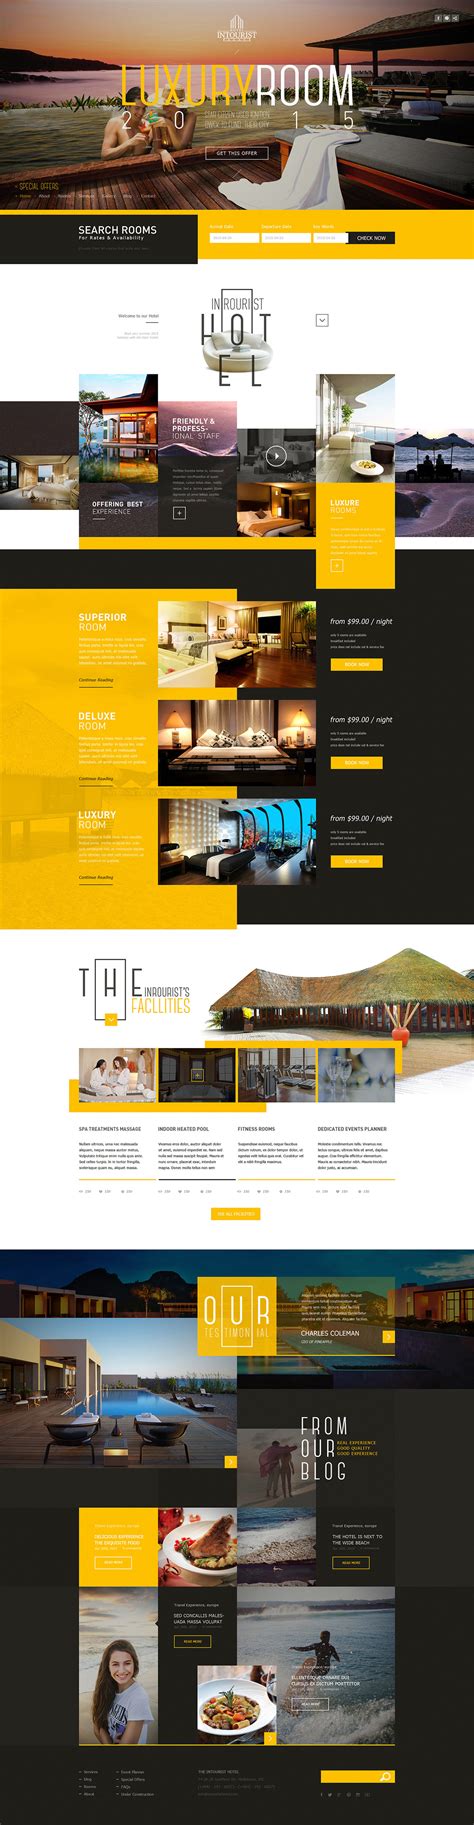 LUXURYROOM酒店网站设计 - - 大美工dameigong.cn